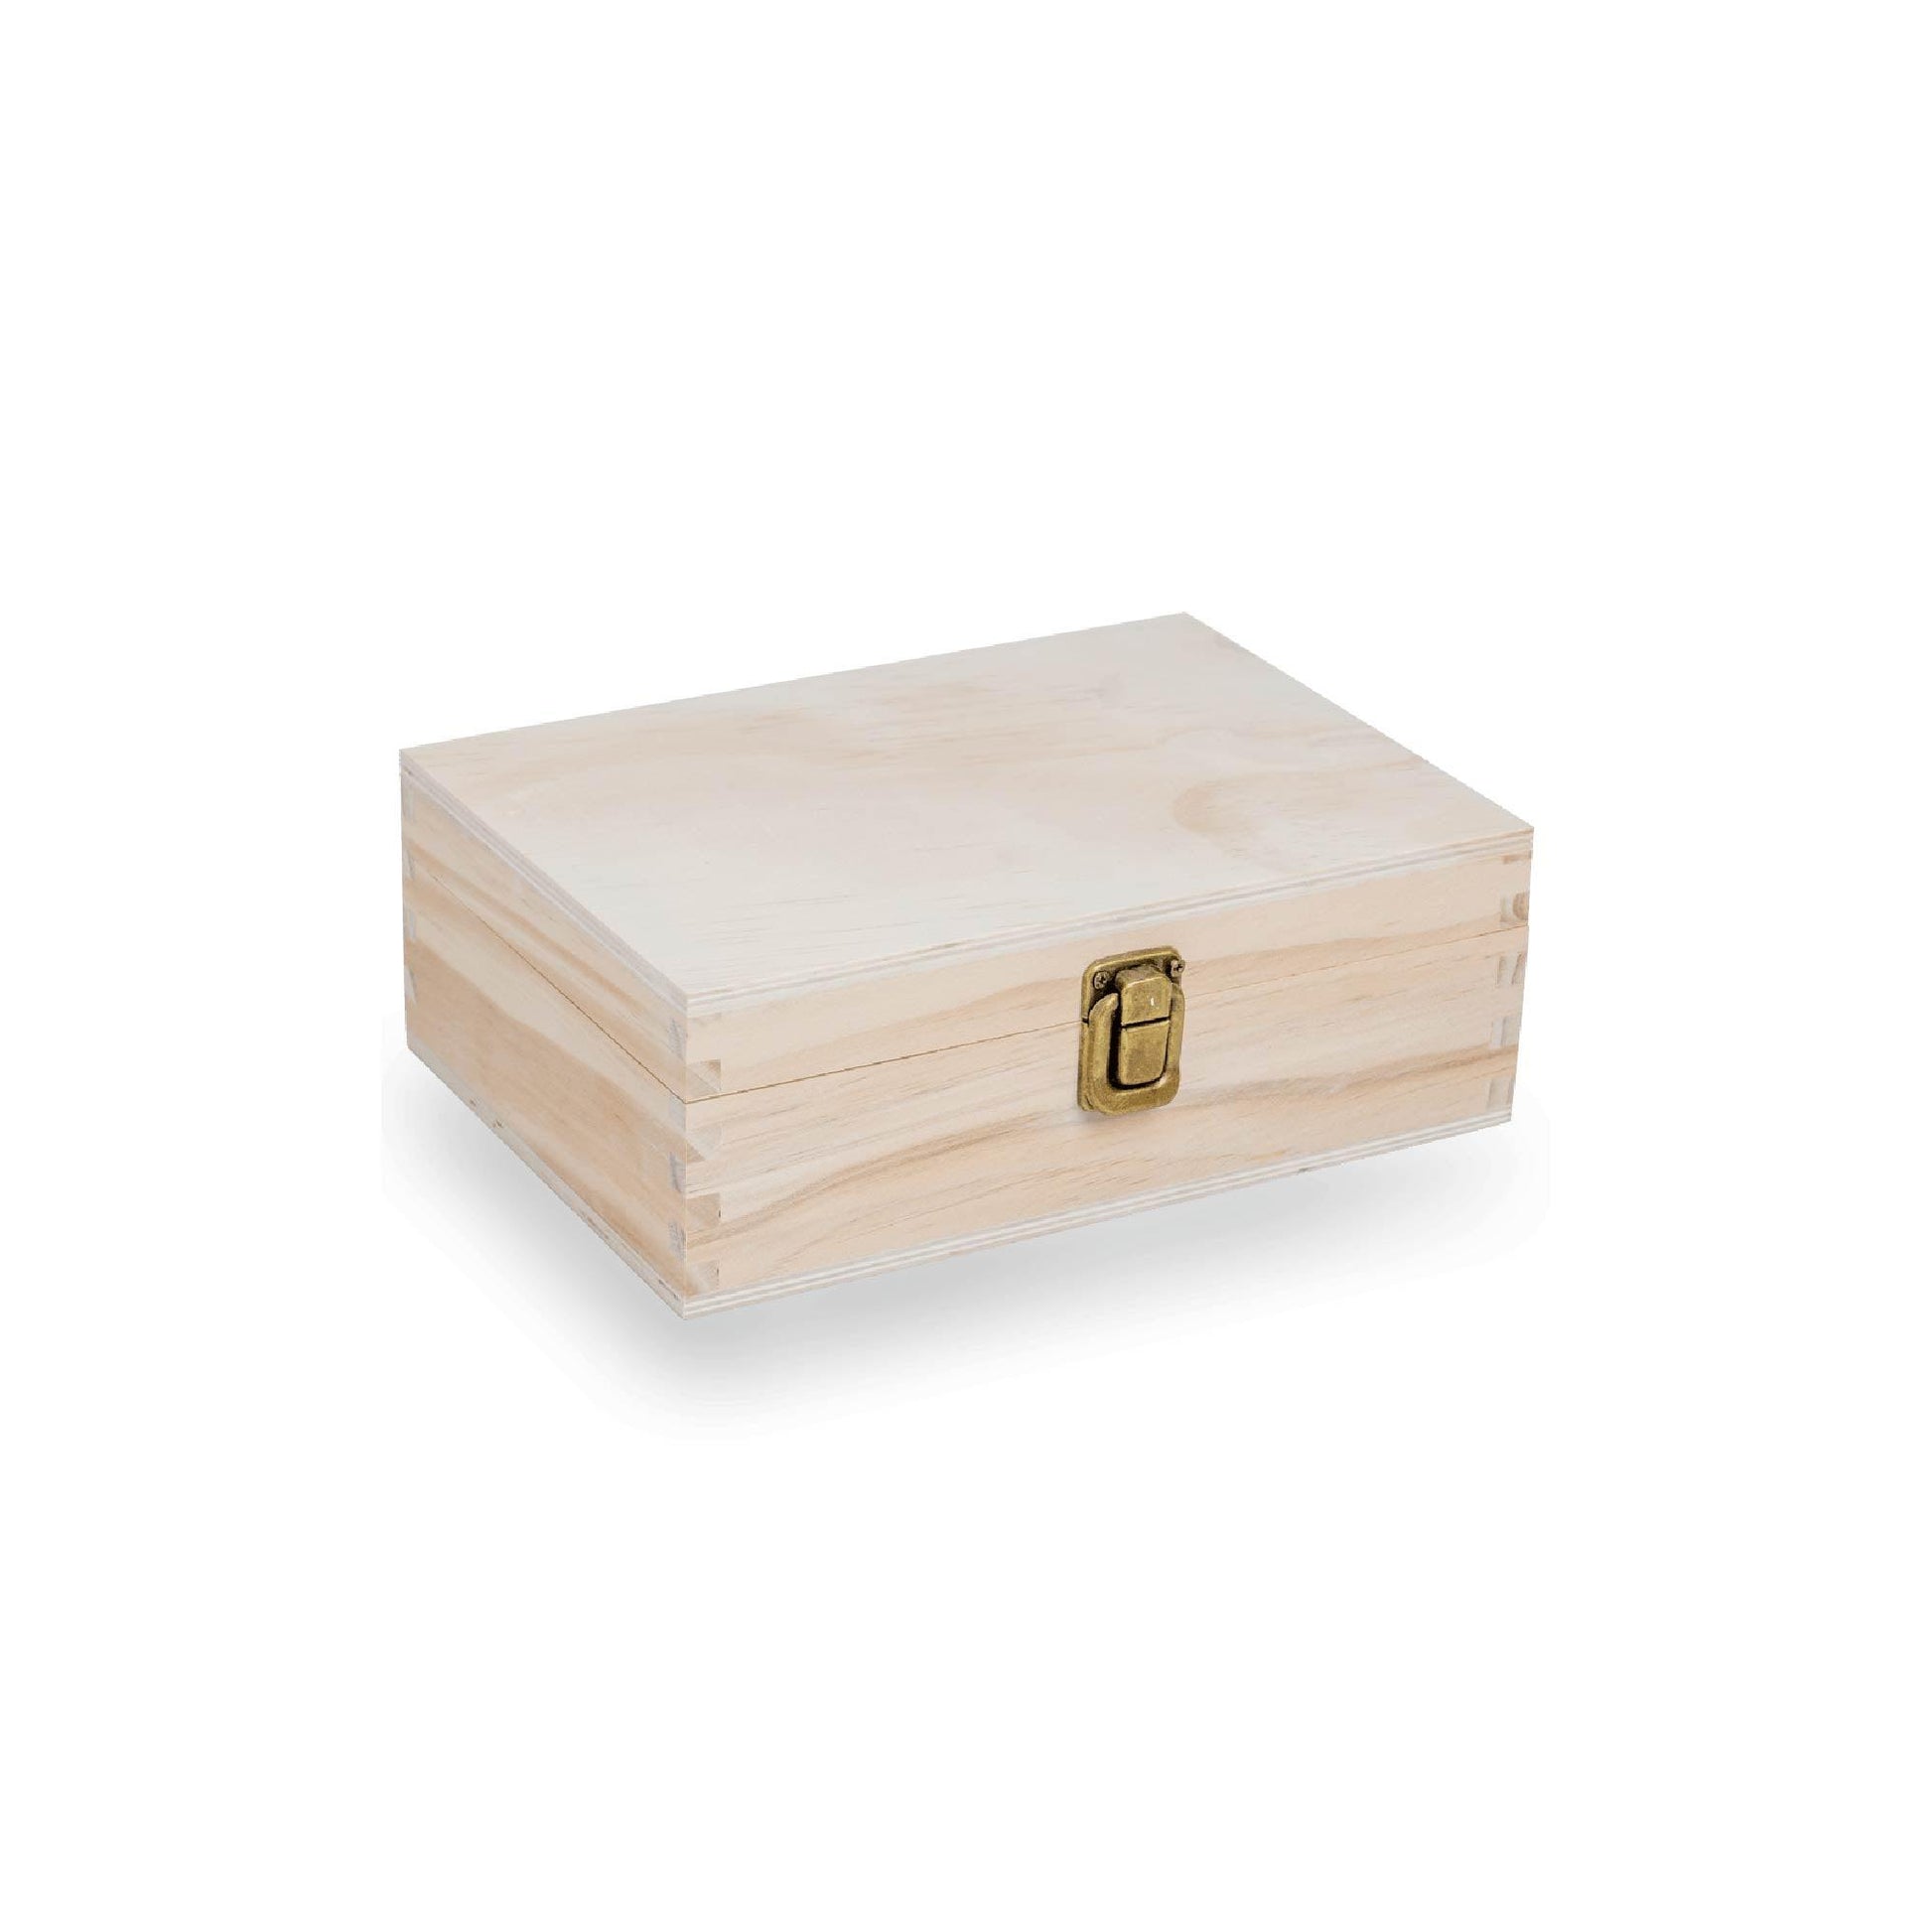 MakerFlo Crafts Cigar Boxes, Pine Wood in Ebony Black